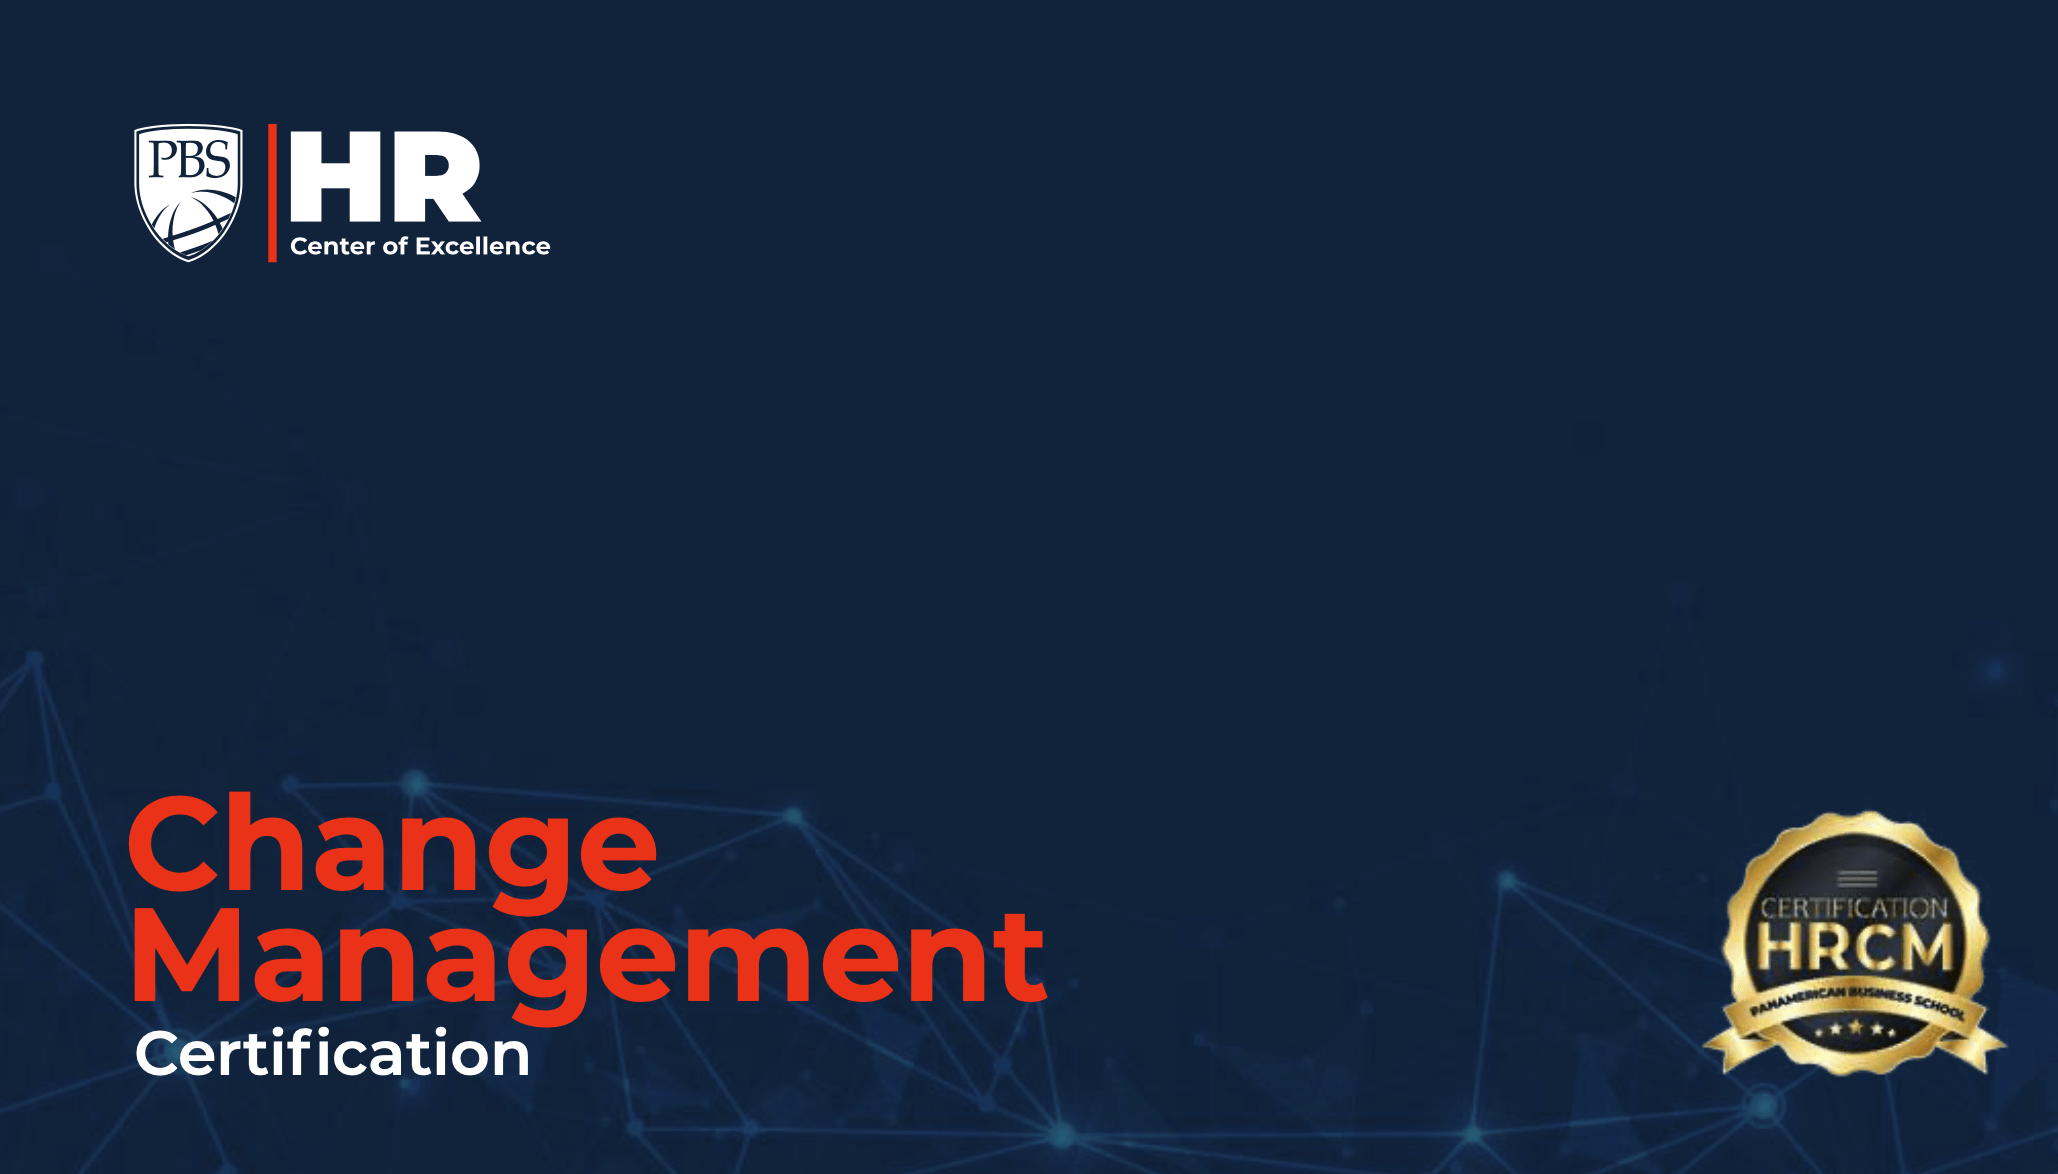 Change Management Professional Certification HRCM: Change Management Certification